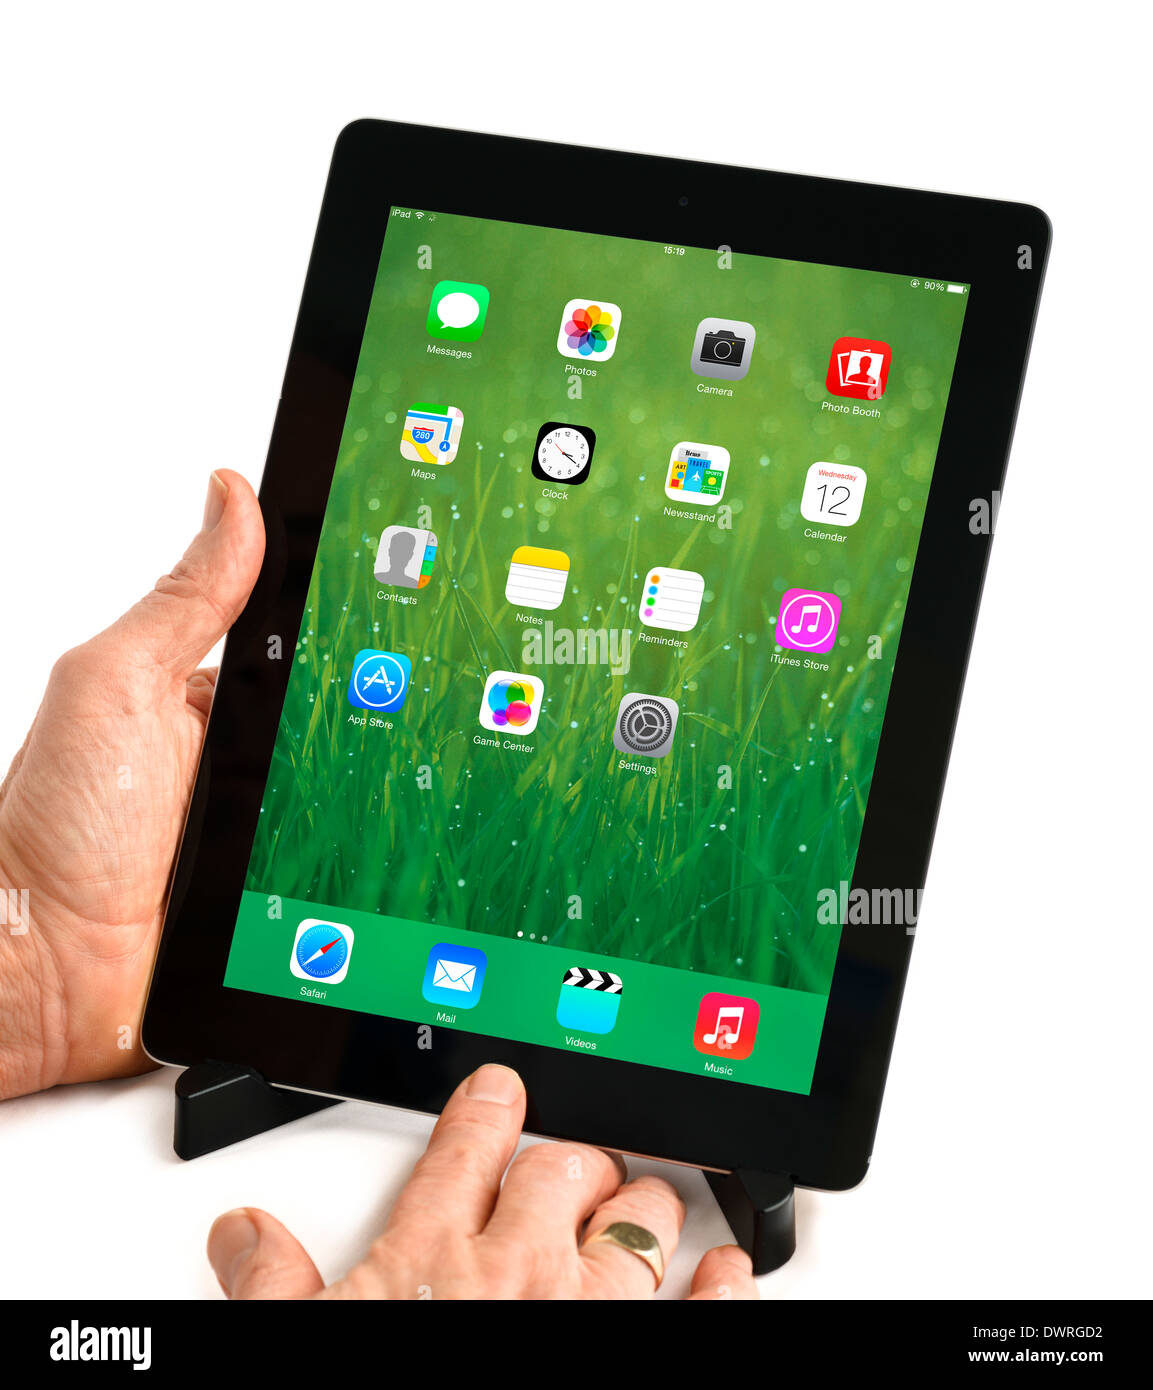 iOS 7.1 home screen on an Apple iPad 4th generation retina display tablet computer Stock Photo